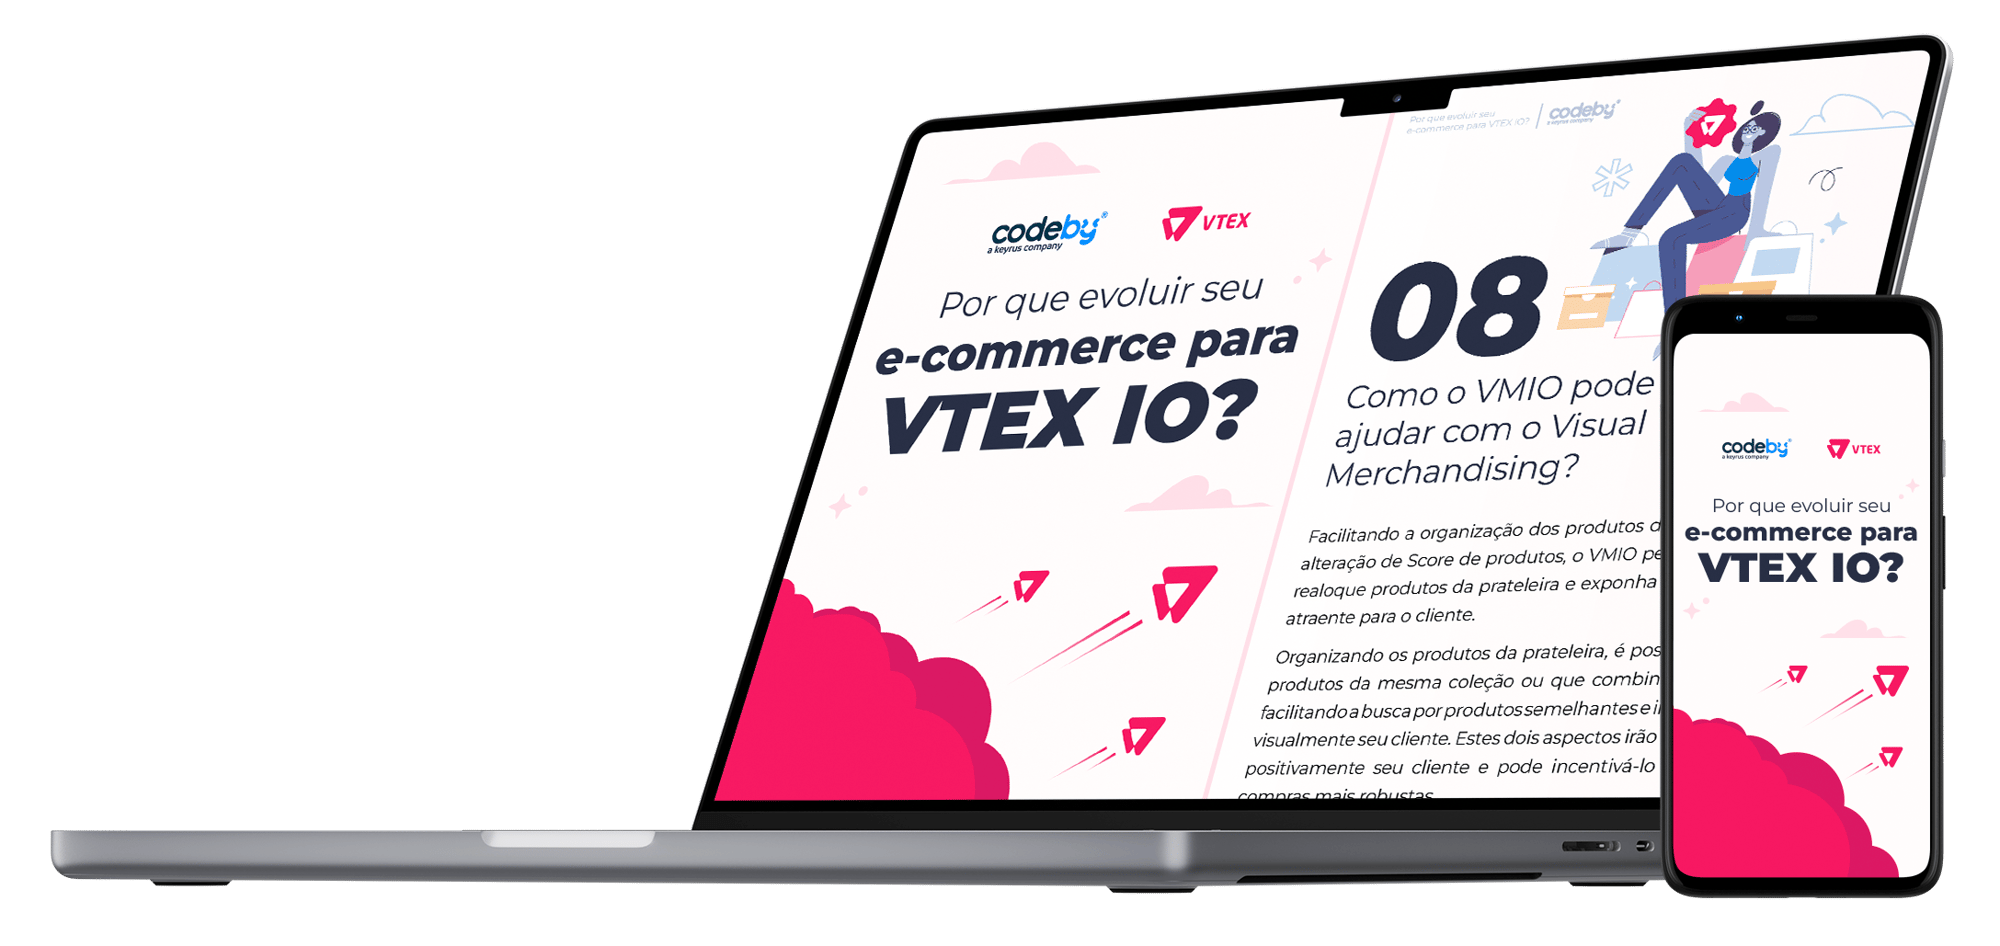 LP - Banners Ebook - Por que evoluir seu e-commerce para VTEX IO